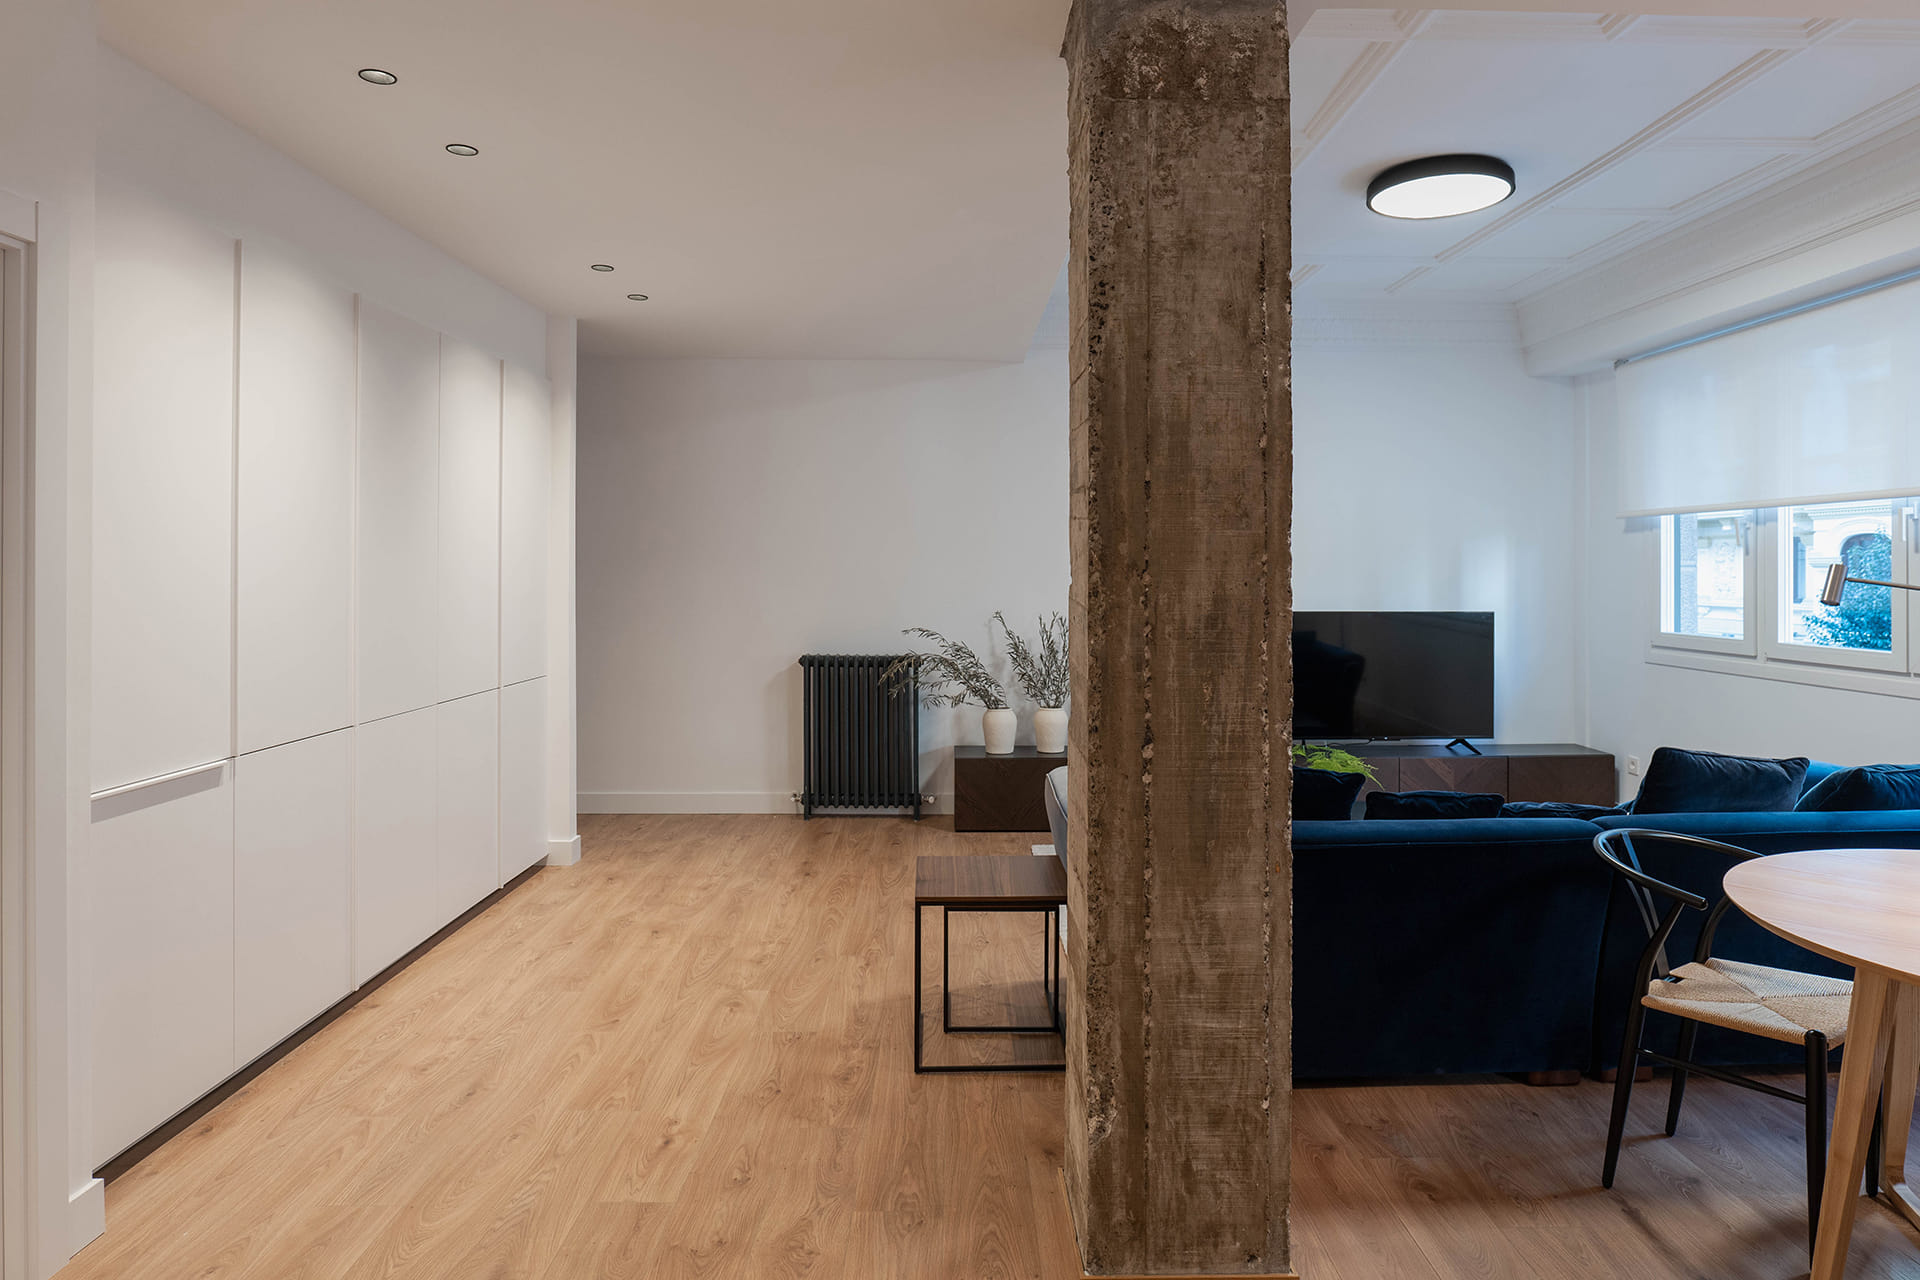 Bright and spacious living room. Architect Borja Vildosola renovation